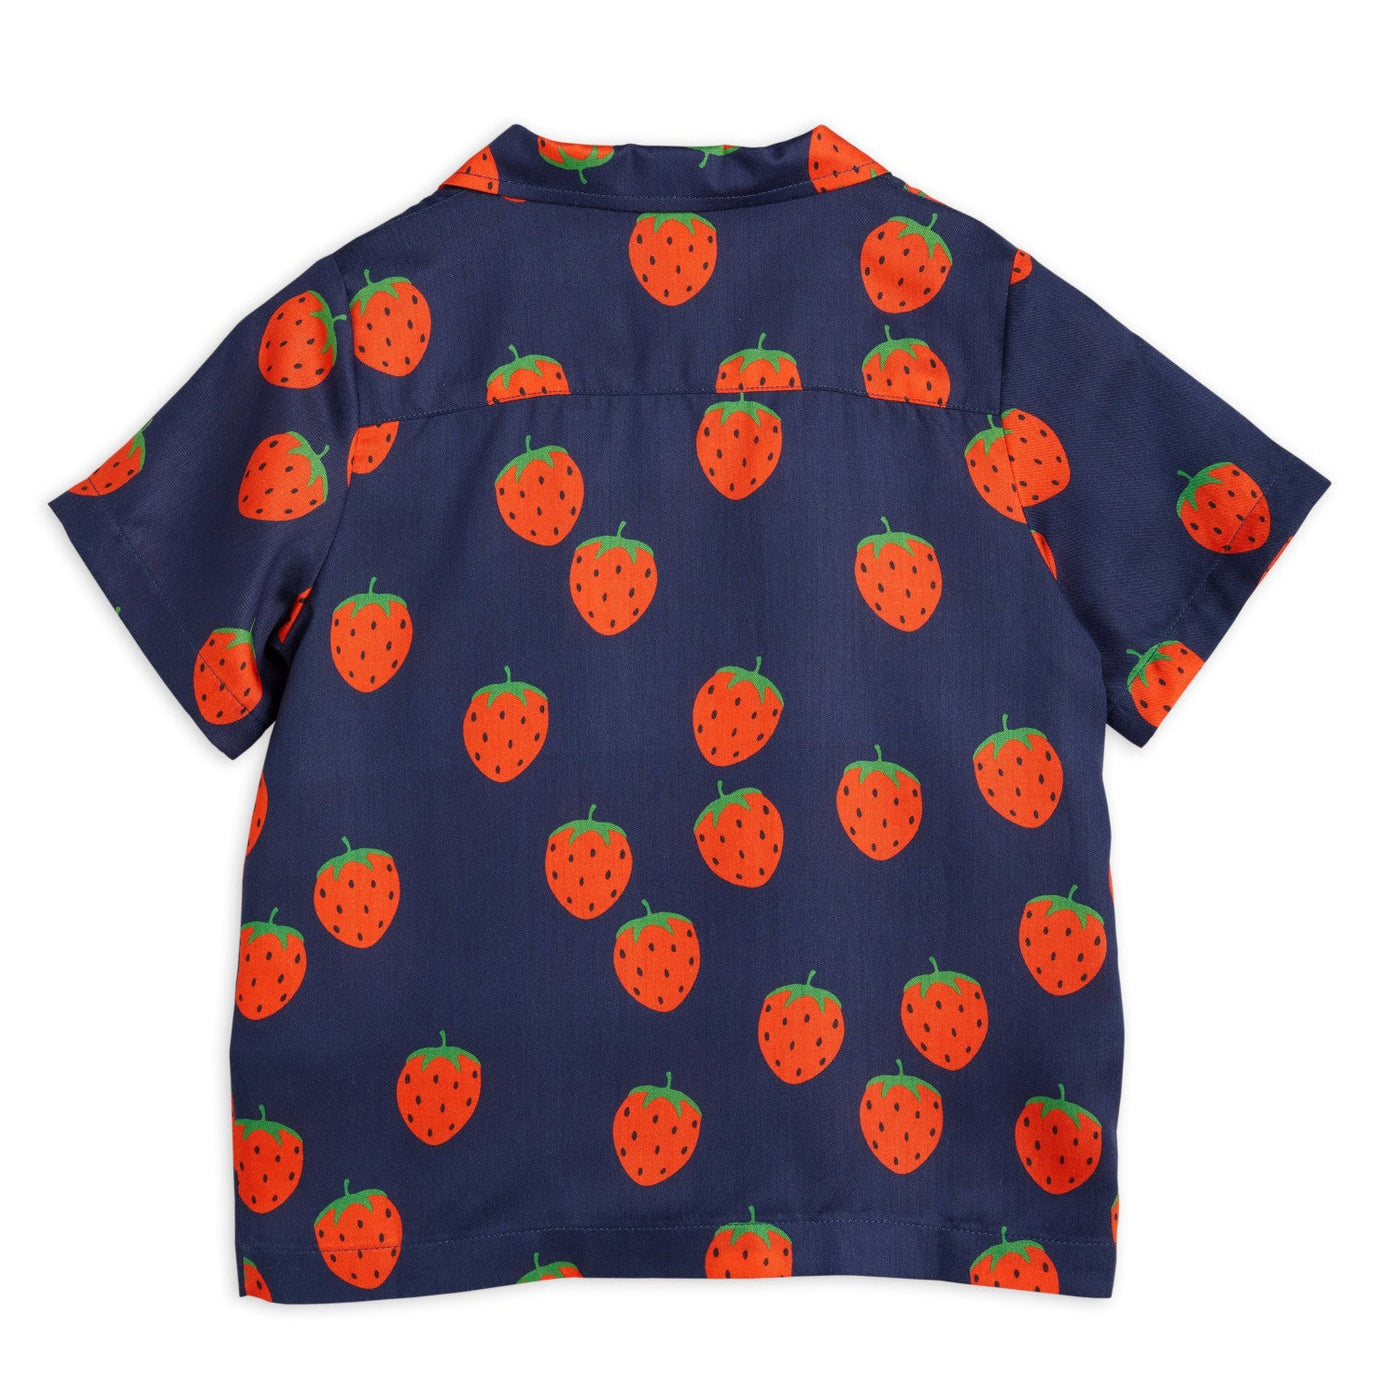 Strawberries Woven Shirt by Mini Rodini - Petite Belle